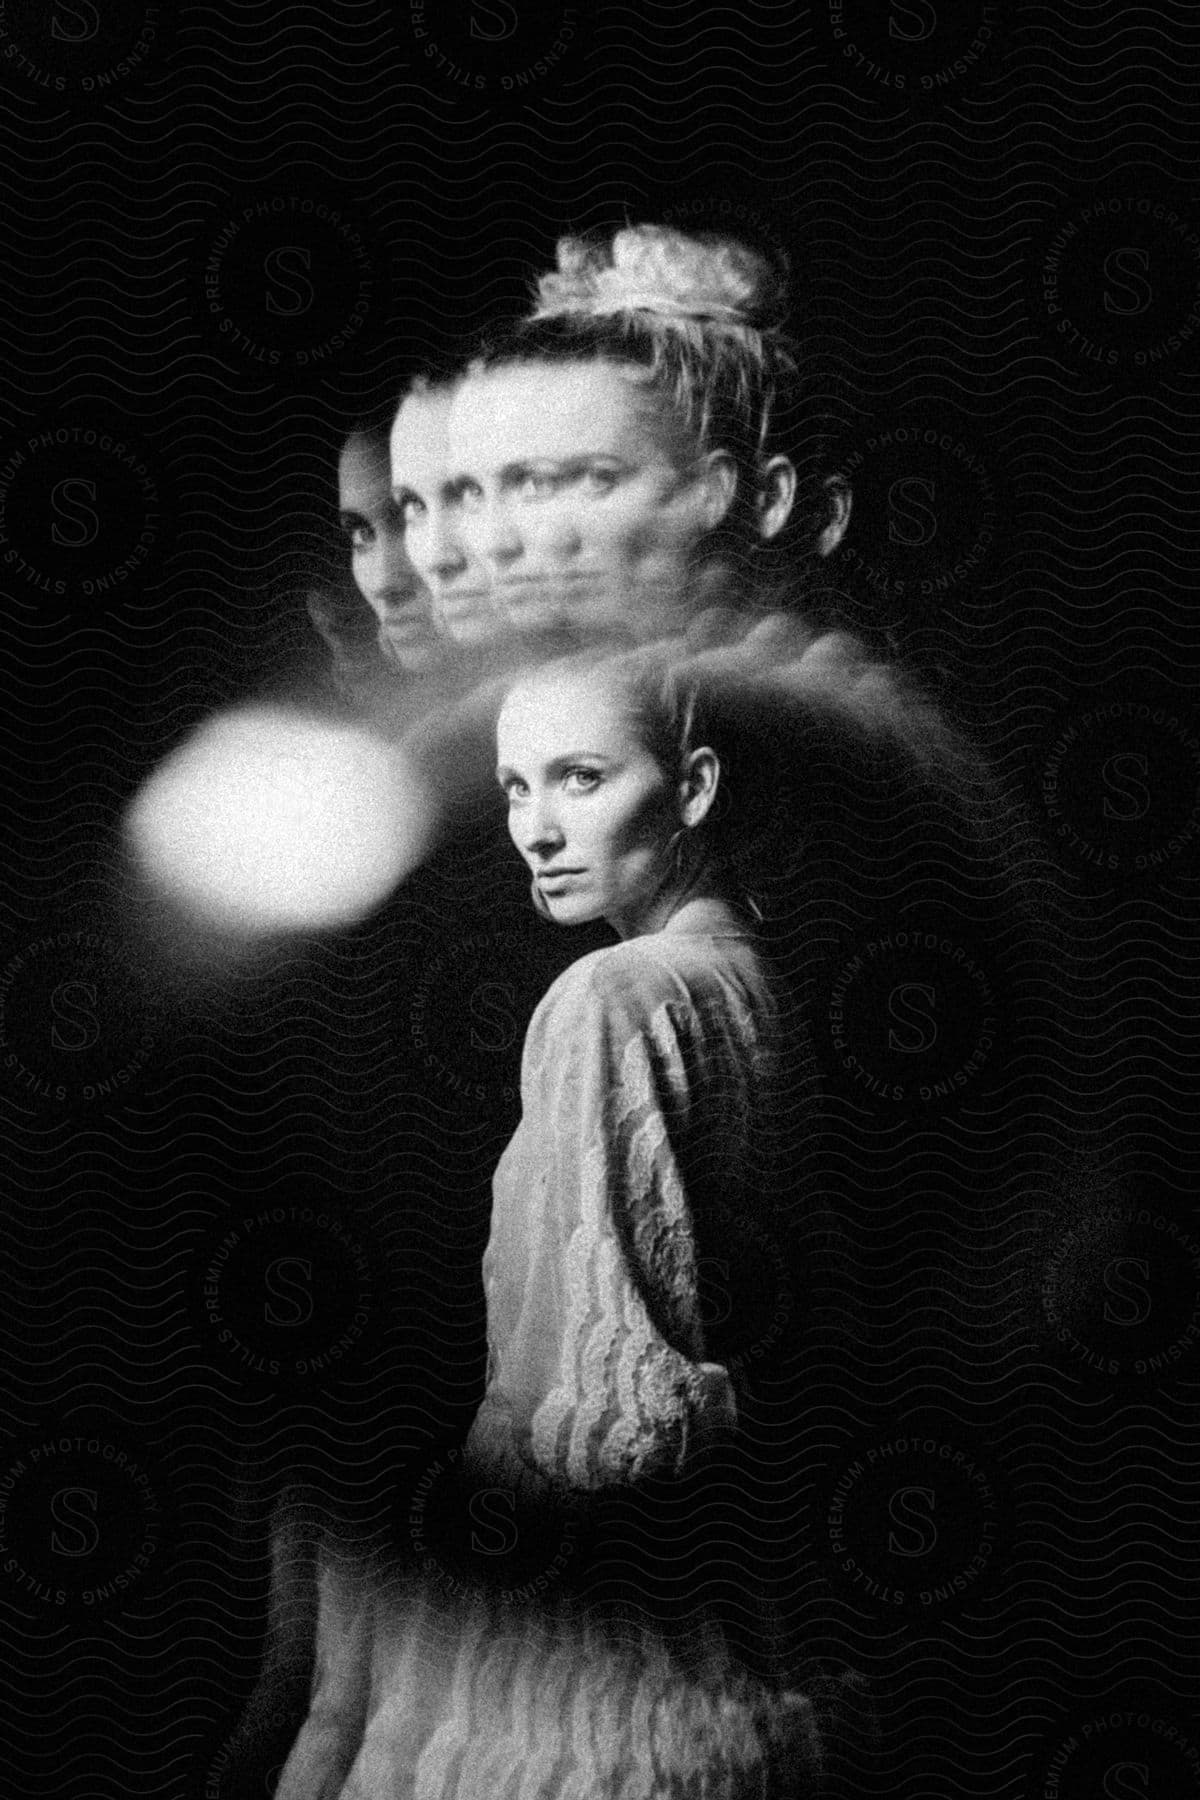 A woman posing in a dark room.